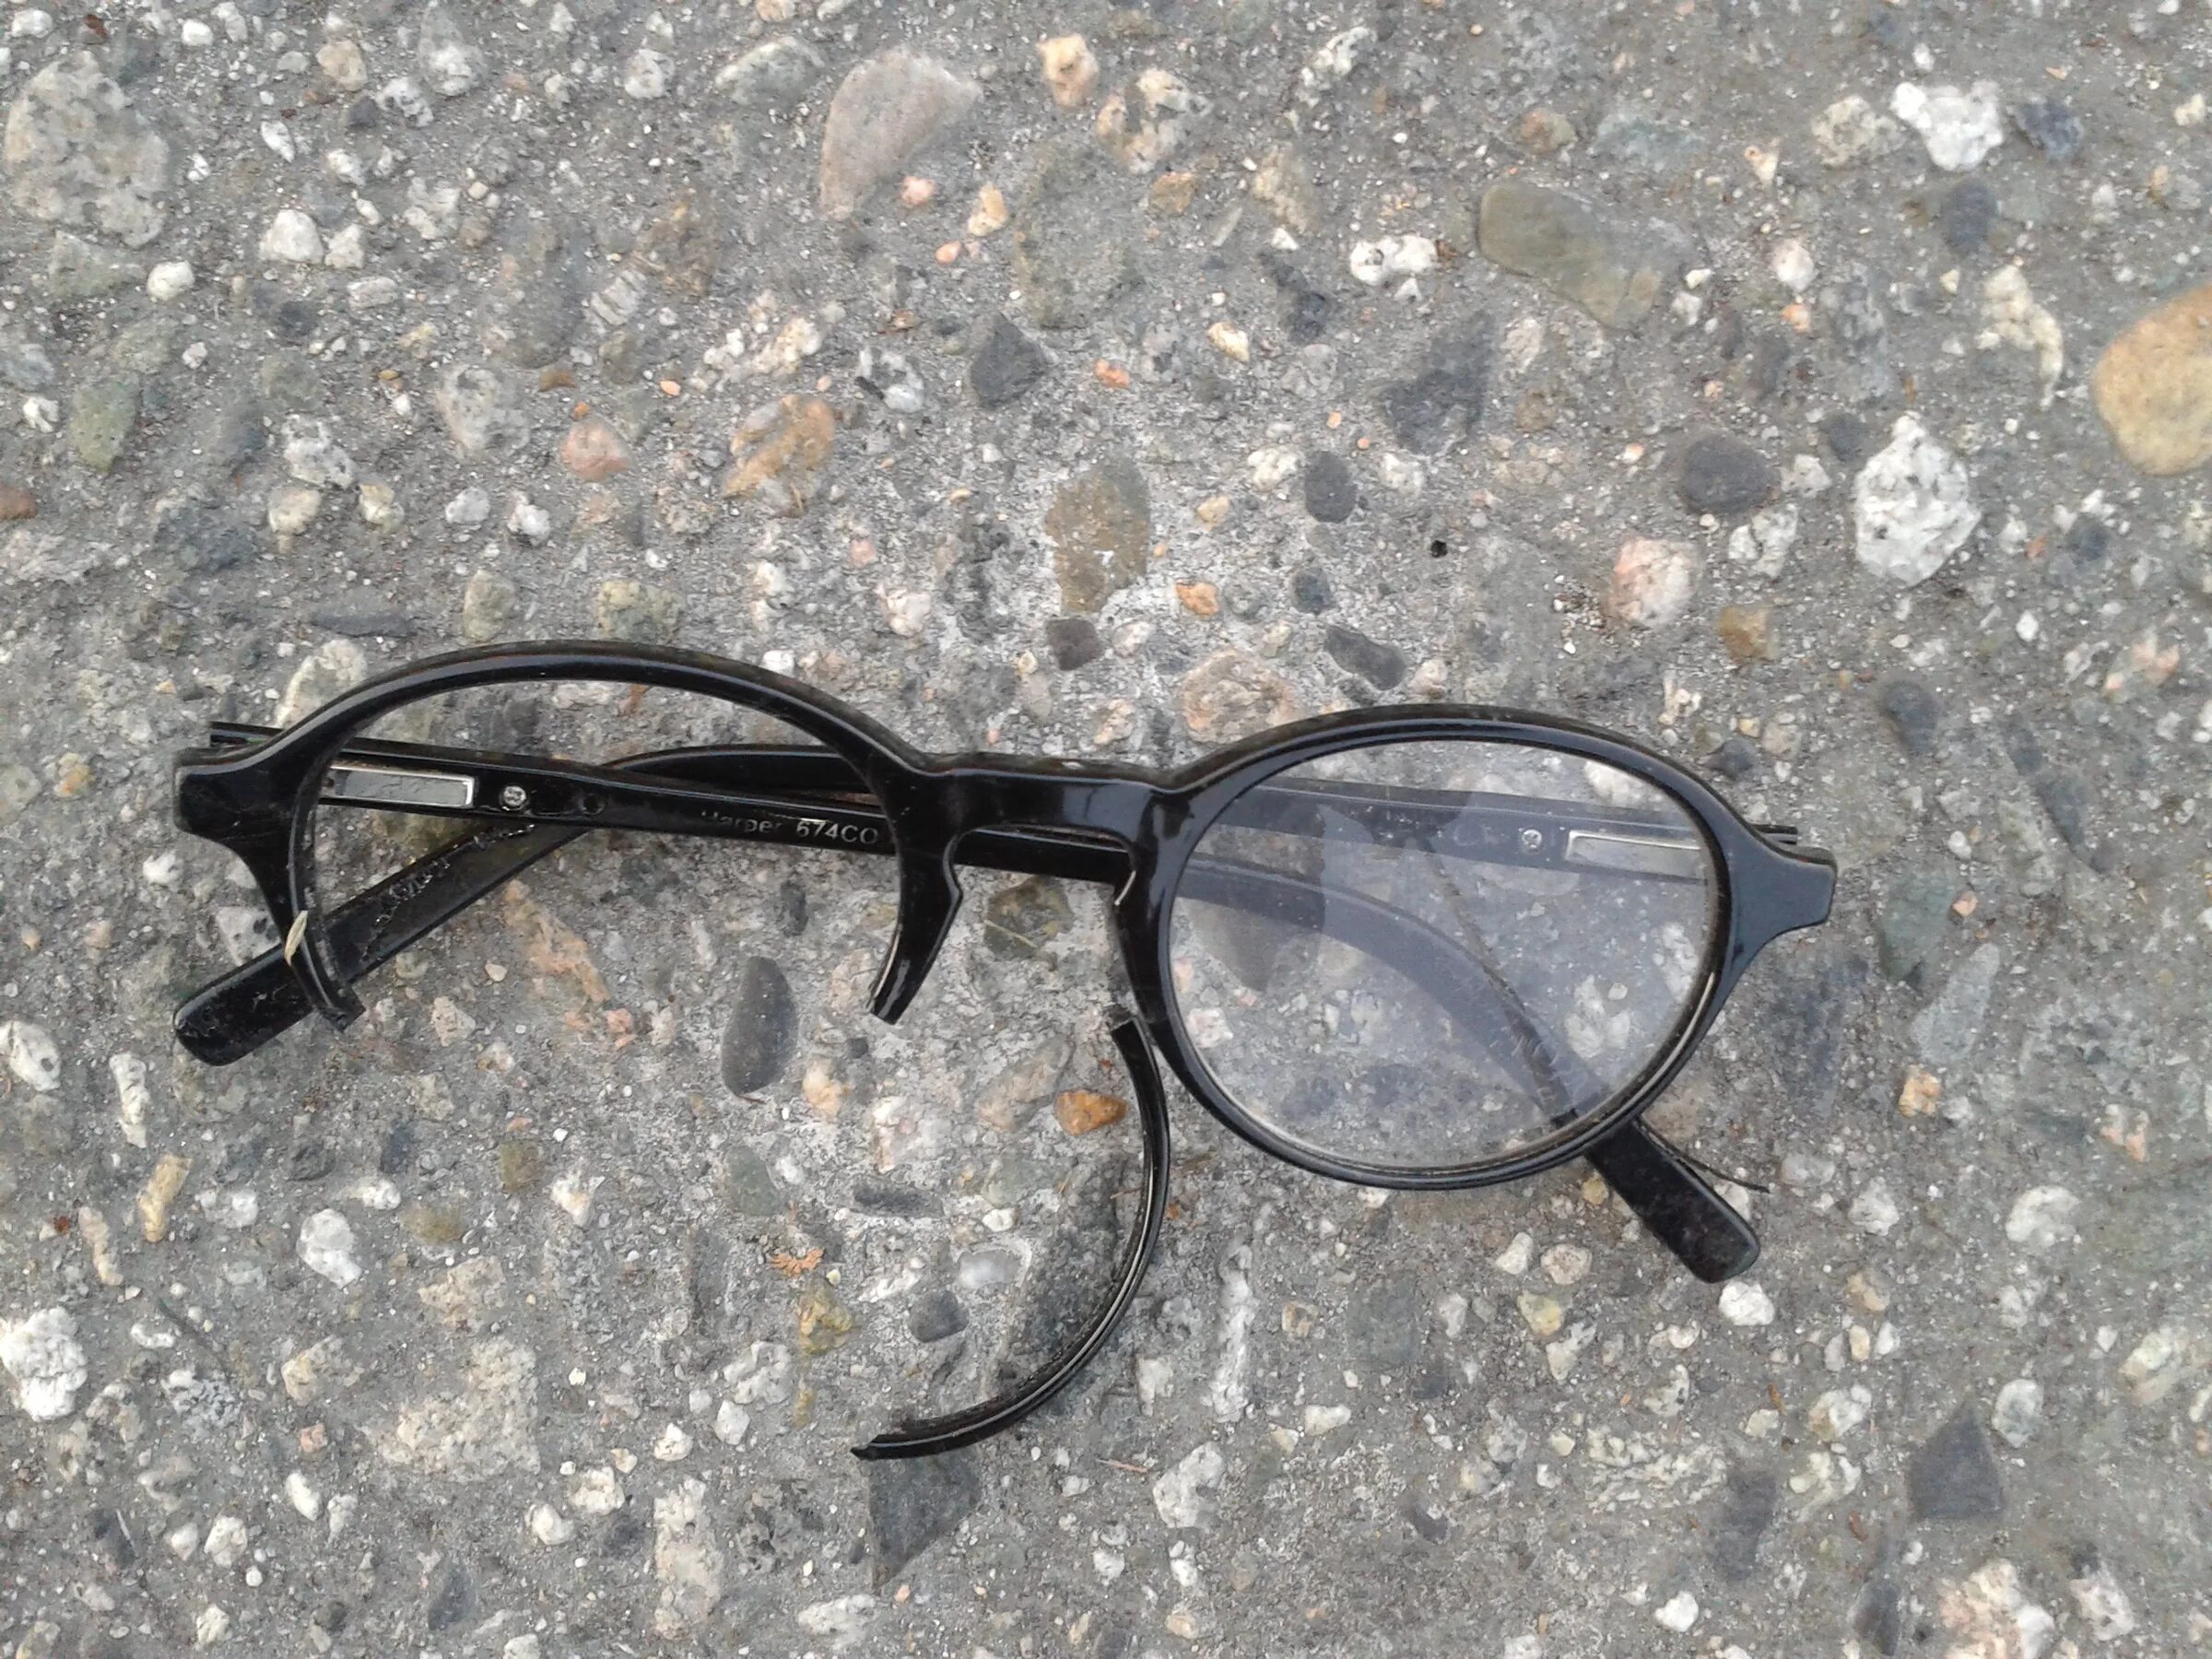 Разбили очко. Разбитые очки. Очки сломались. Треснутые очки. Поломанные очки.